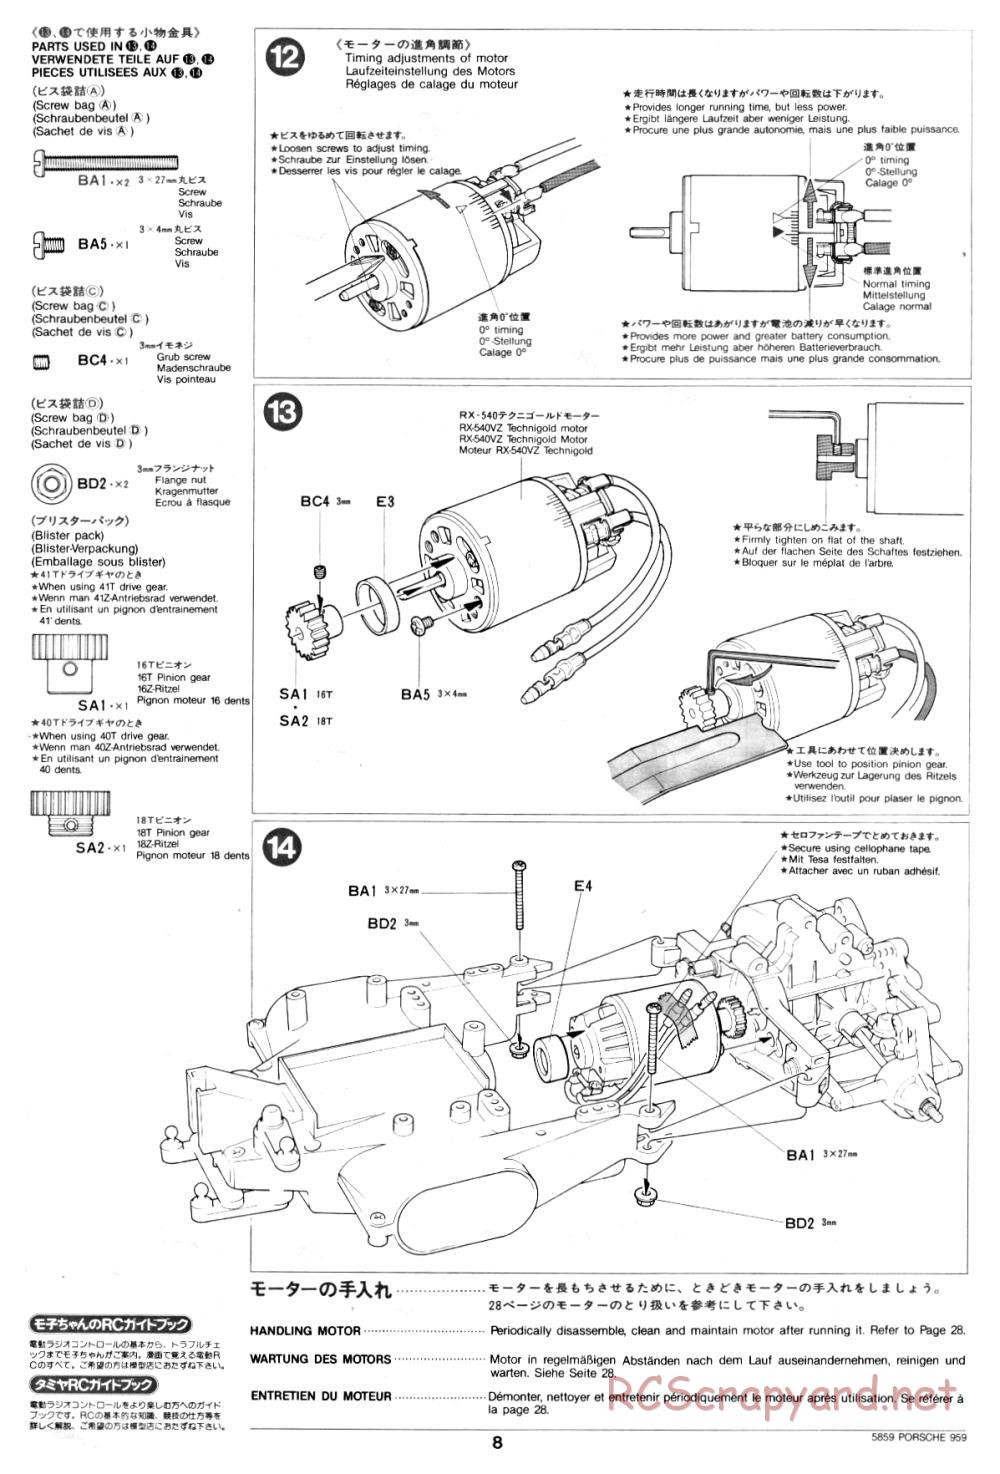 Tamiya - Porsche 959 - 58059 - Manual - Page 8